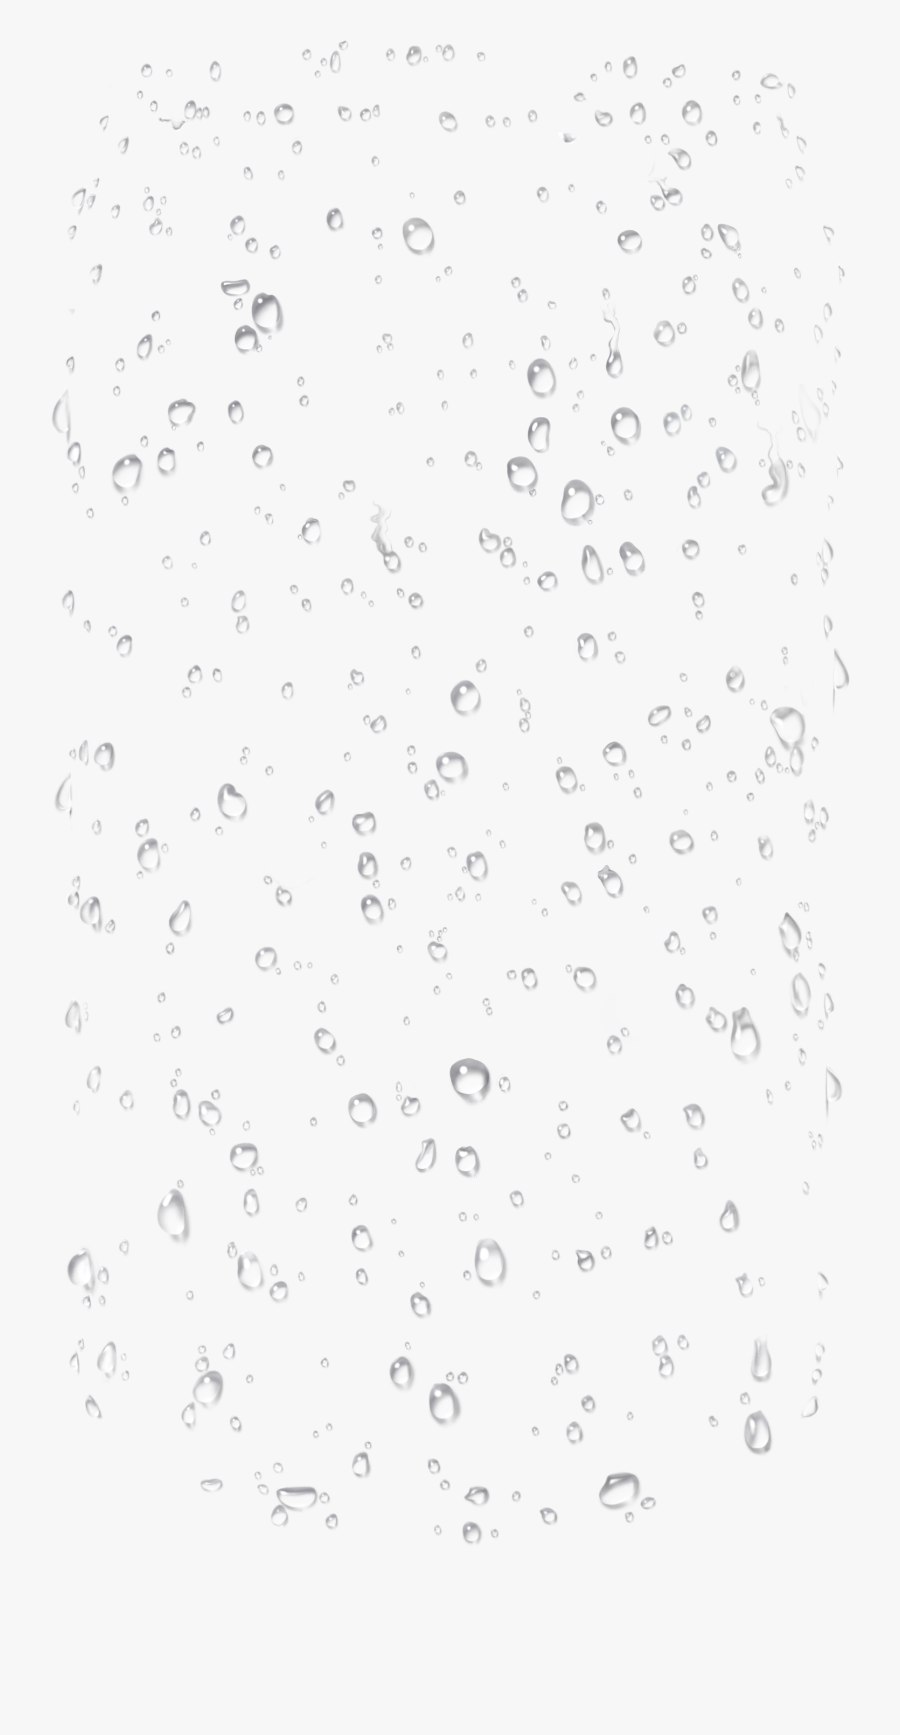 Water Fall Drops Png, Transparent Clipart